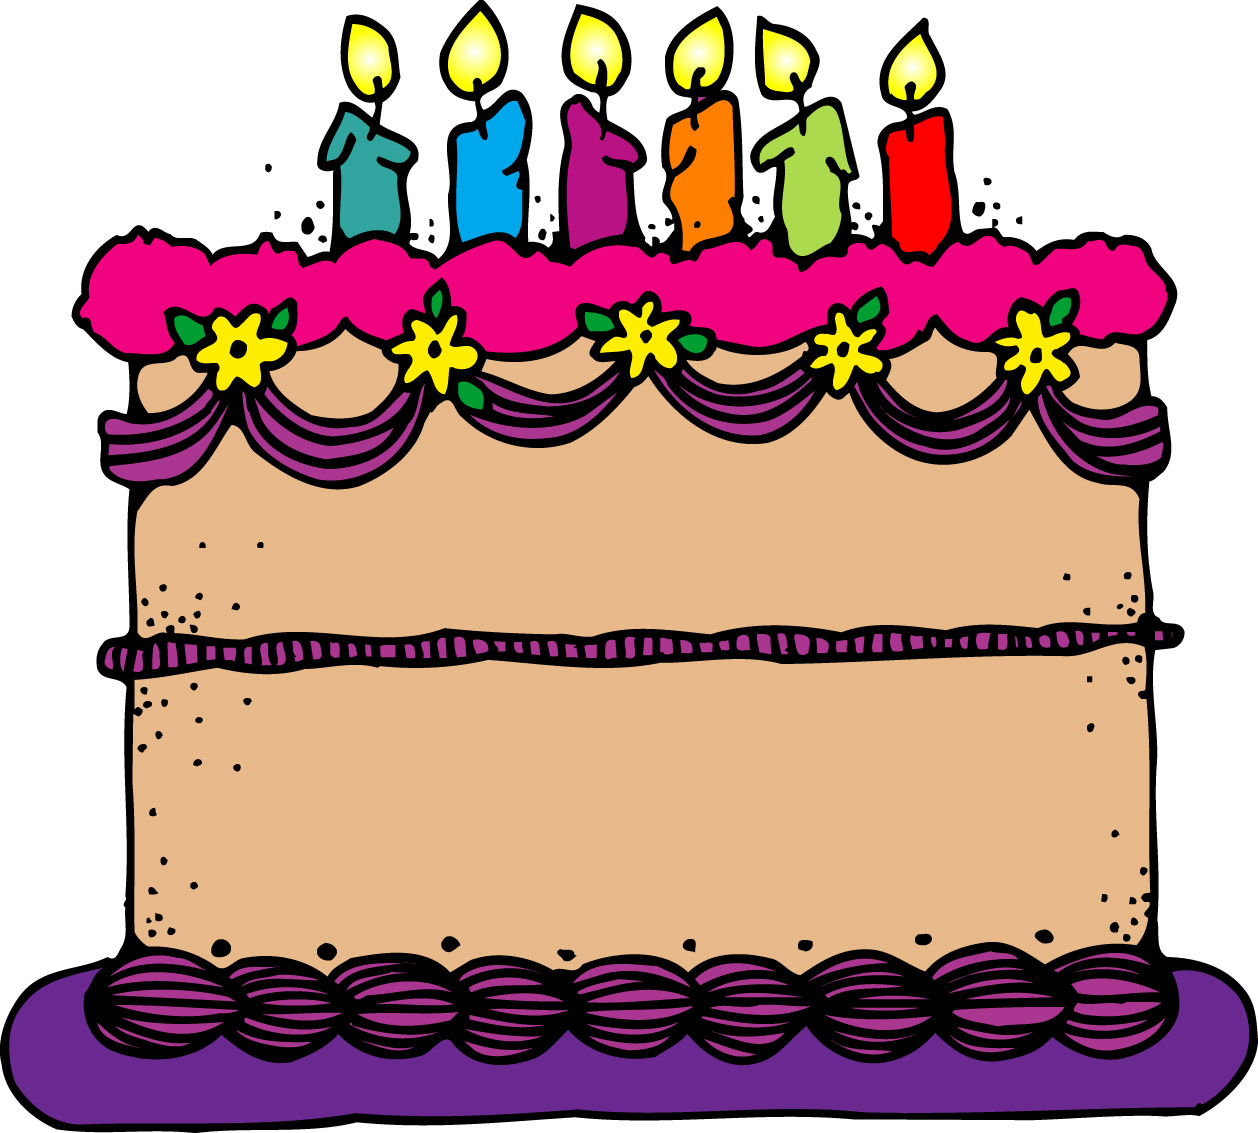 Animated Birthday Cake Clipart Cake Clip Art